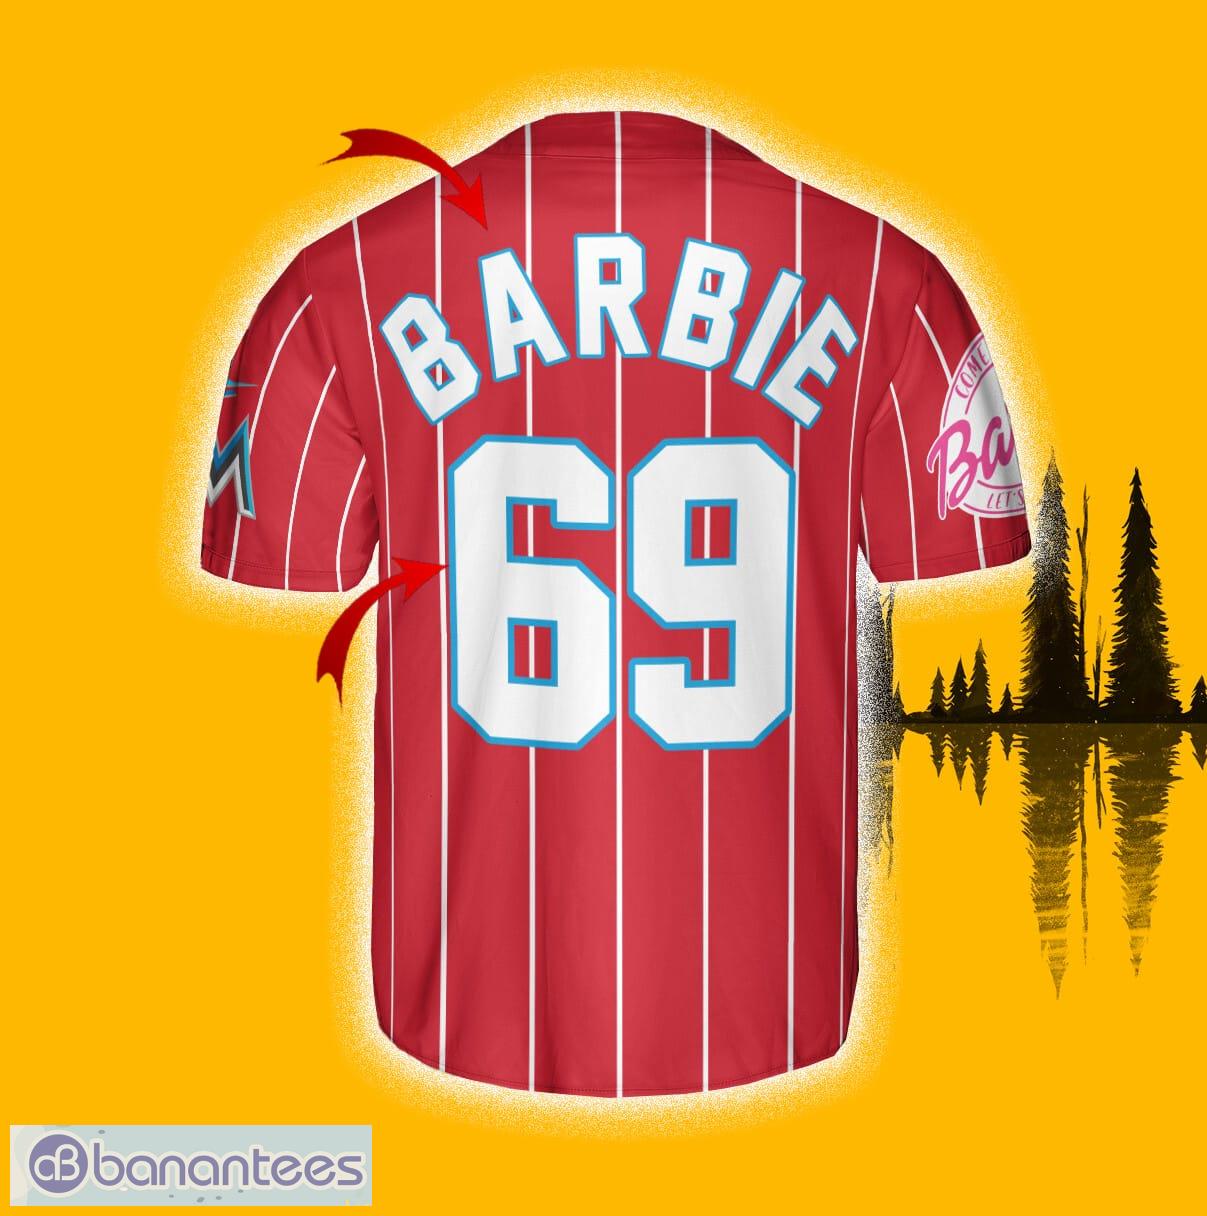 Miami Marlins Barbie Jersey Baseball Shirt Red Custom Number And Name -  Banantees